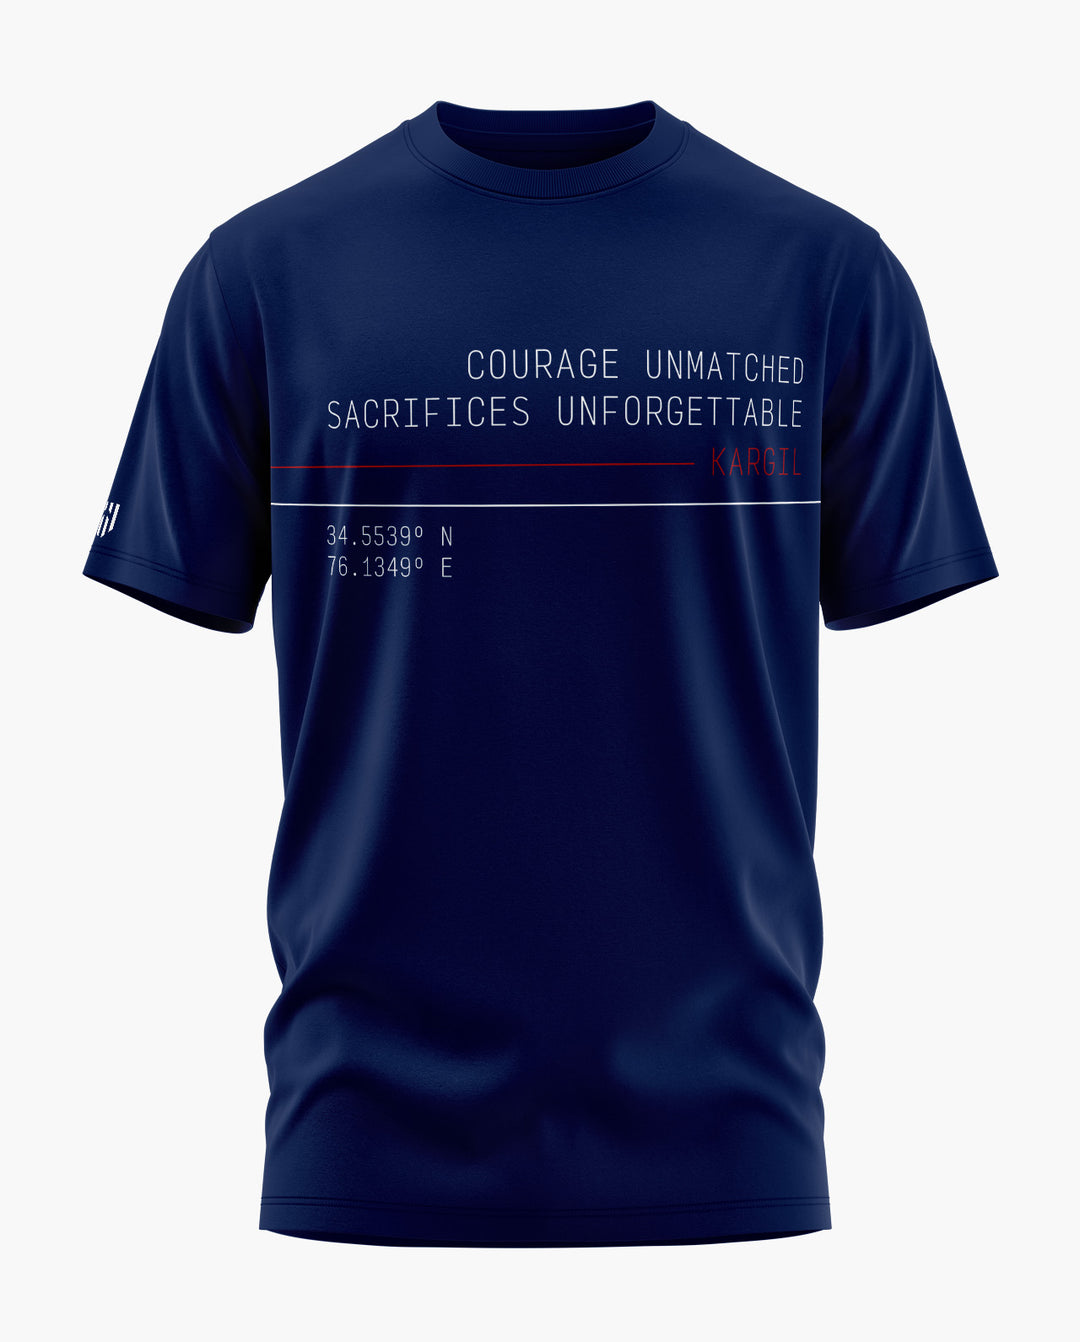 UFORGETTABLE COURAGE T-Shirt